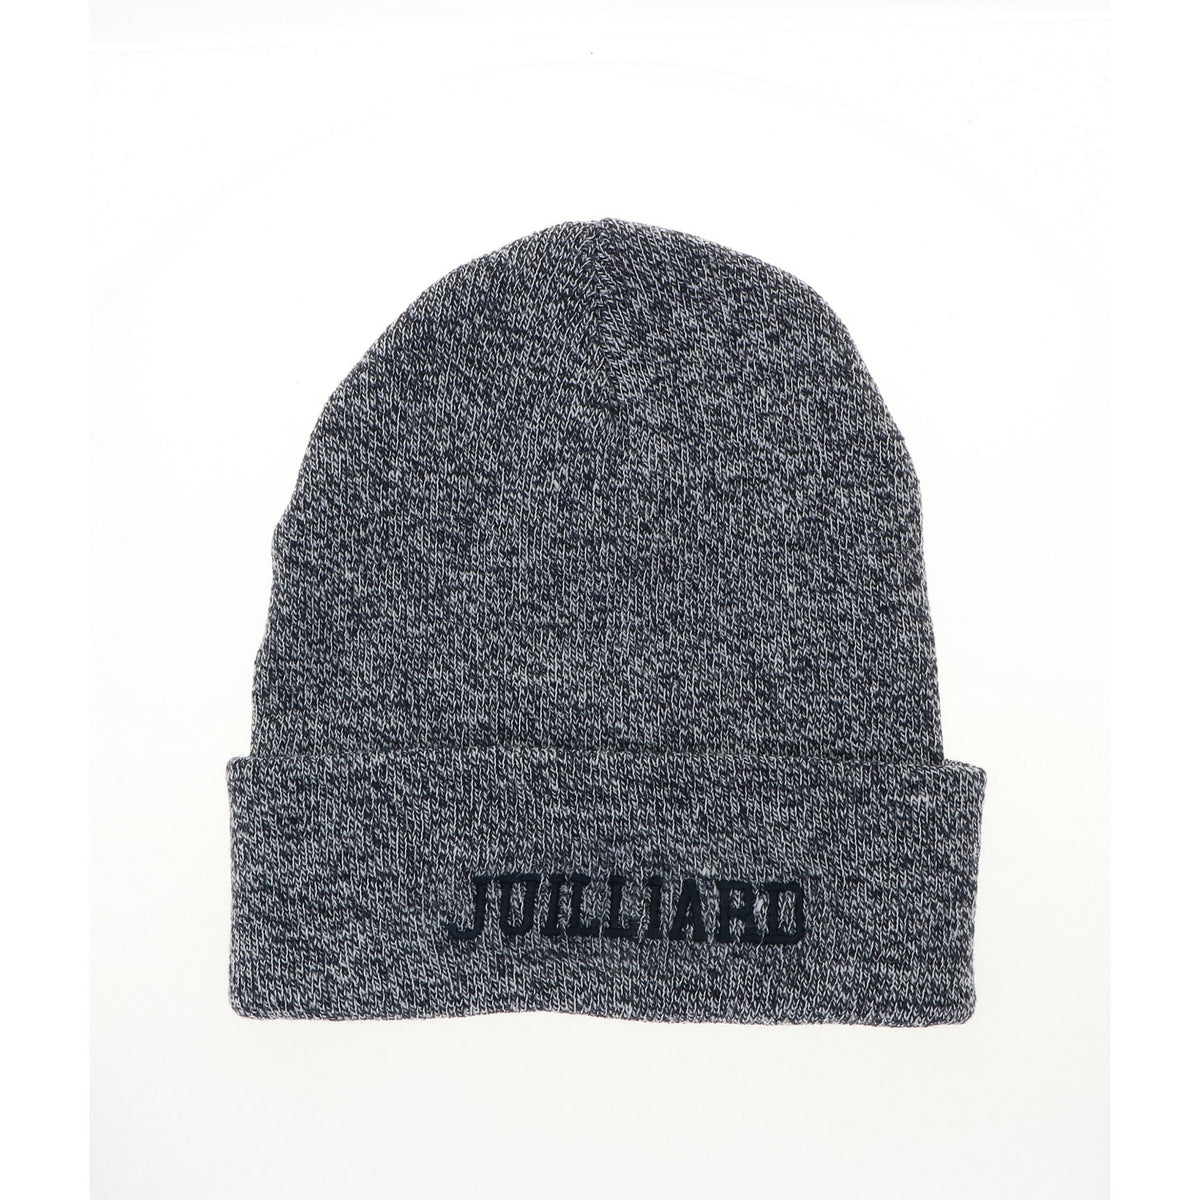 Beanie: Juilliard navy marled winter cap with cuff